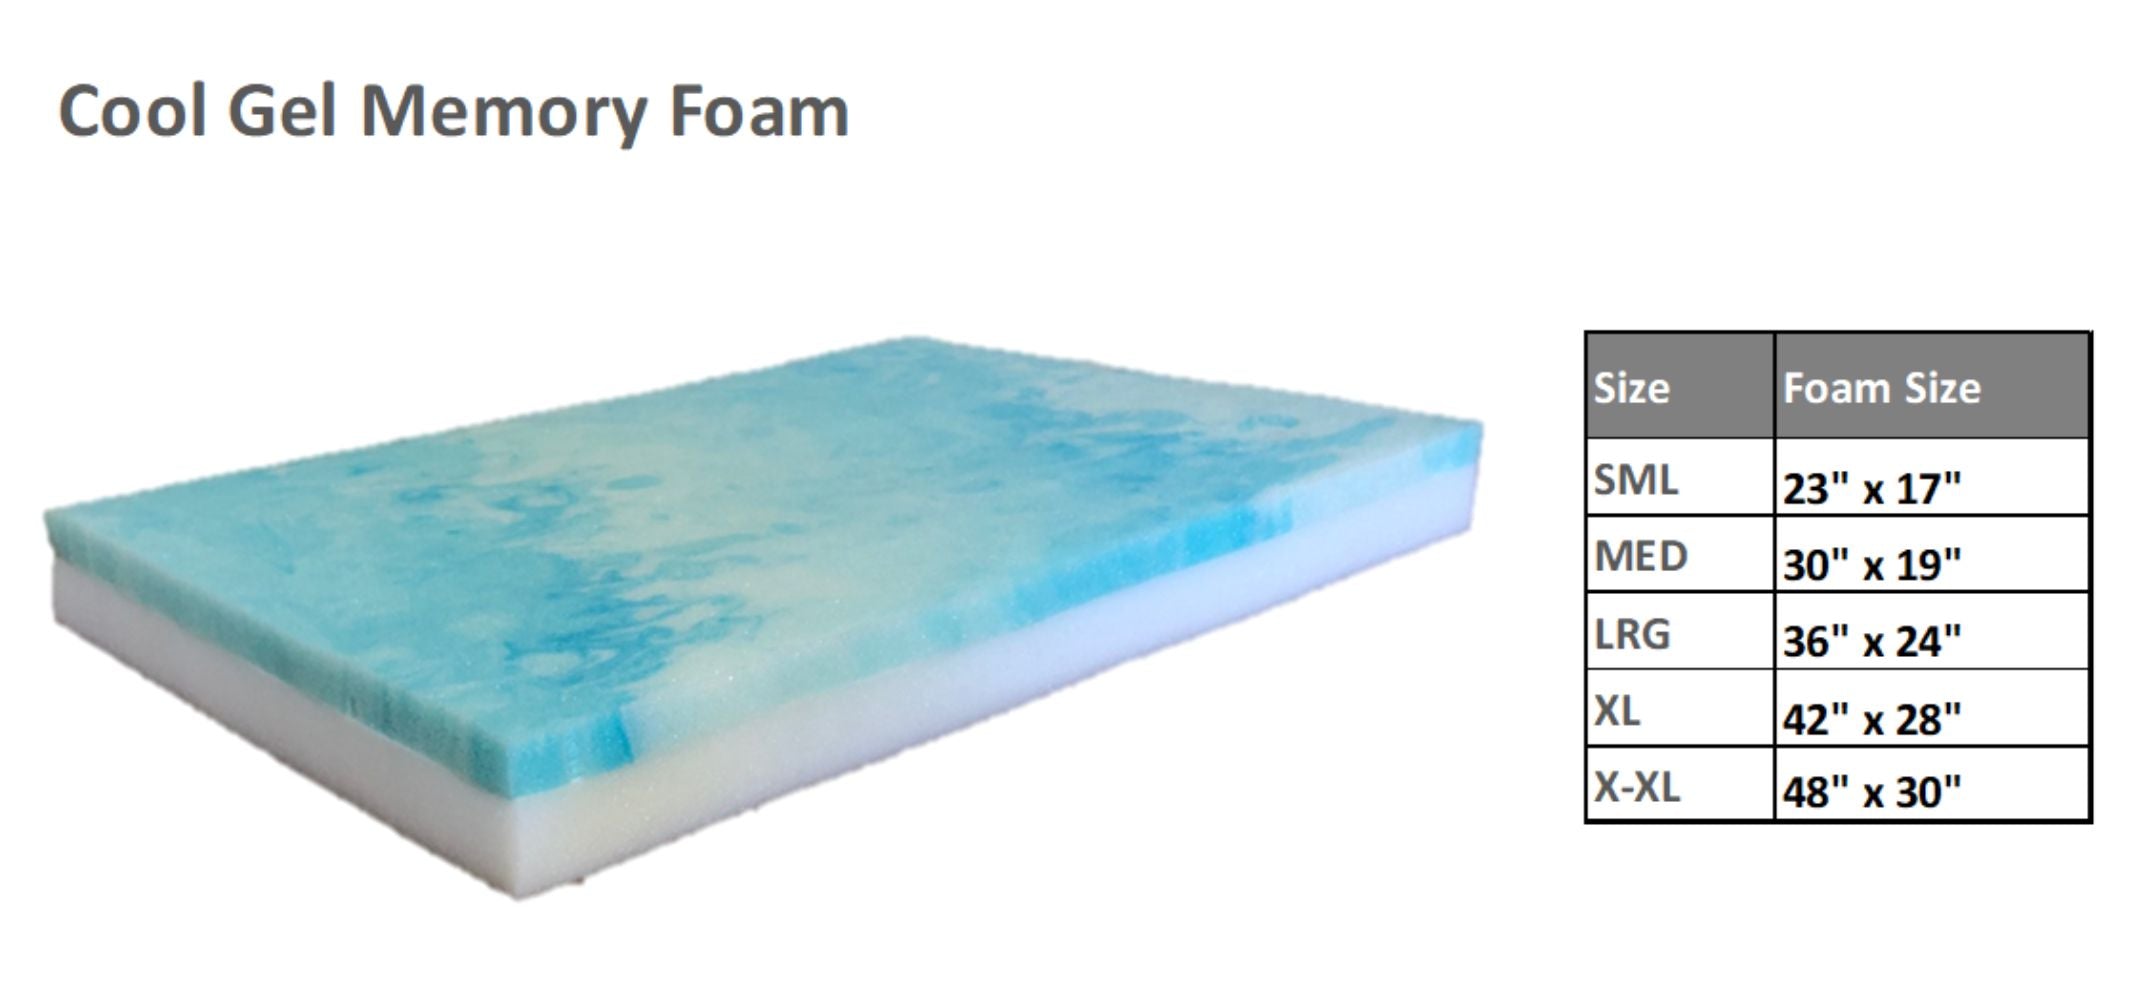 Bowsers The Foam Insert Memory Foam Mattress Size Chart